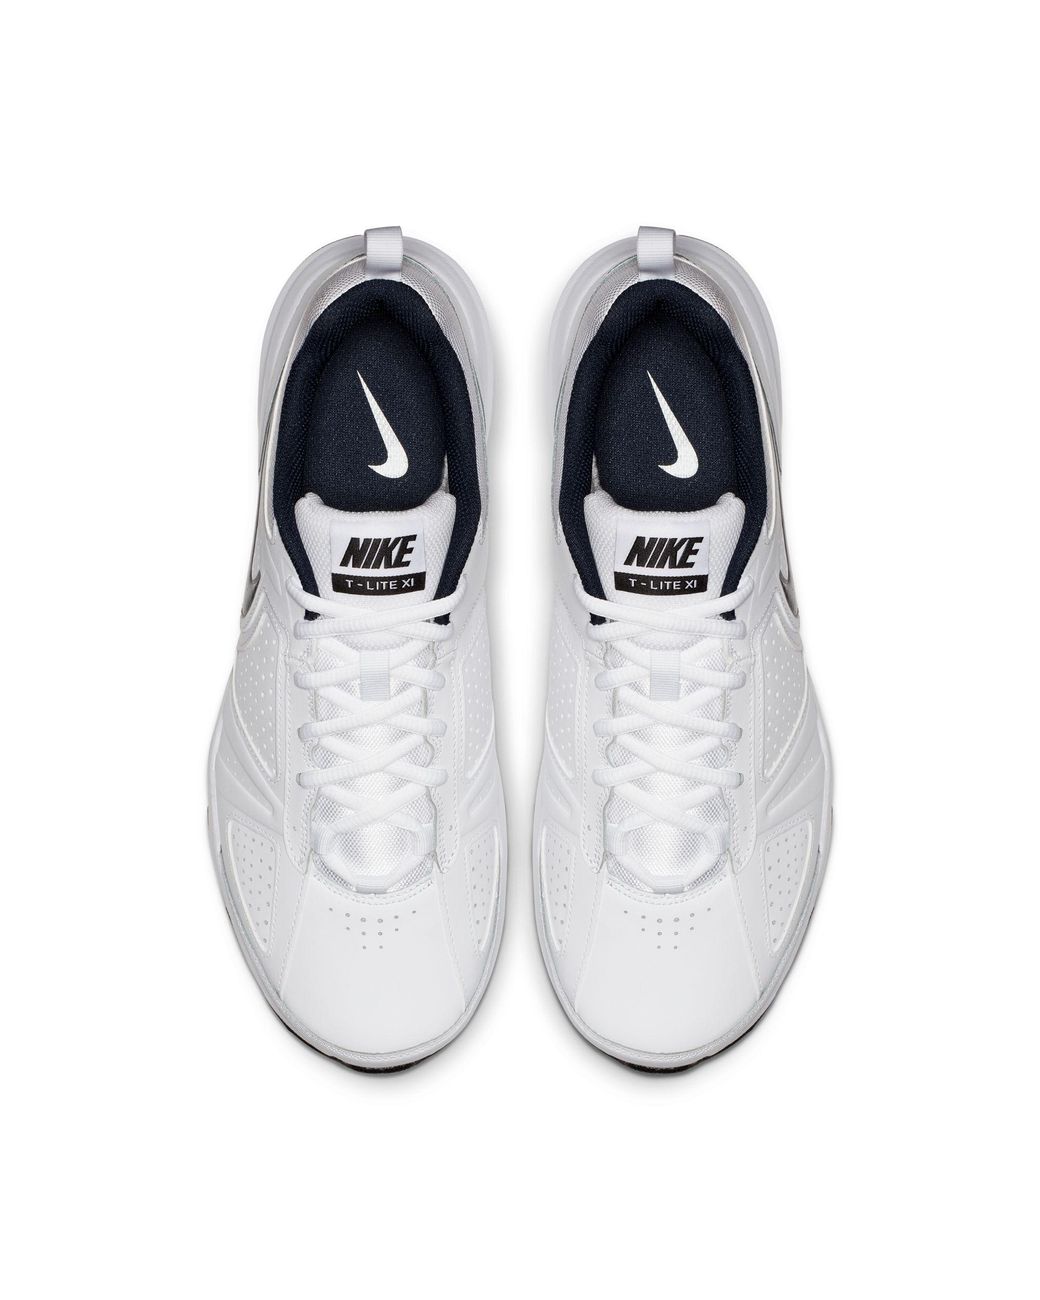 Nike T-lite Xi in White (Black) | Lyst Australia